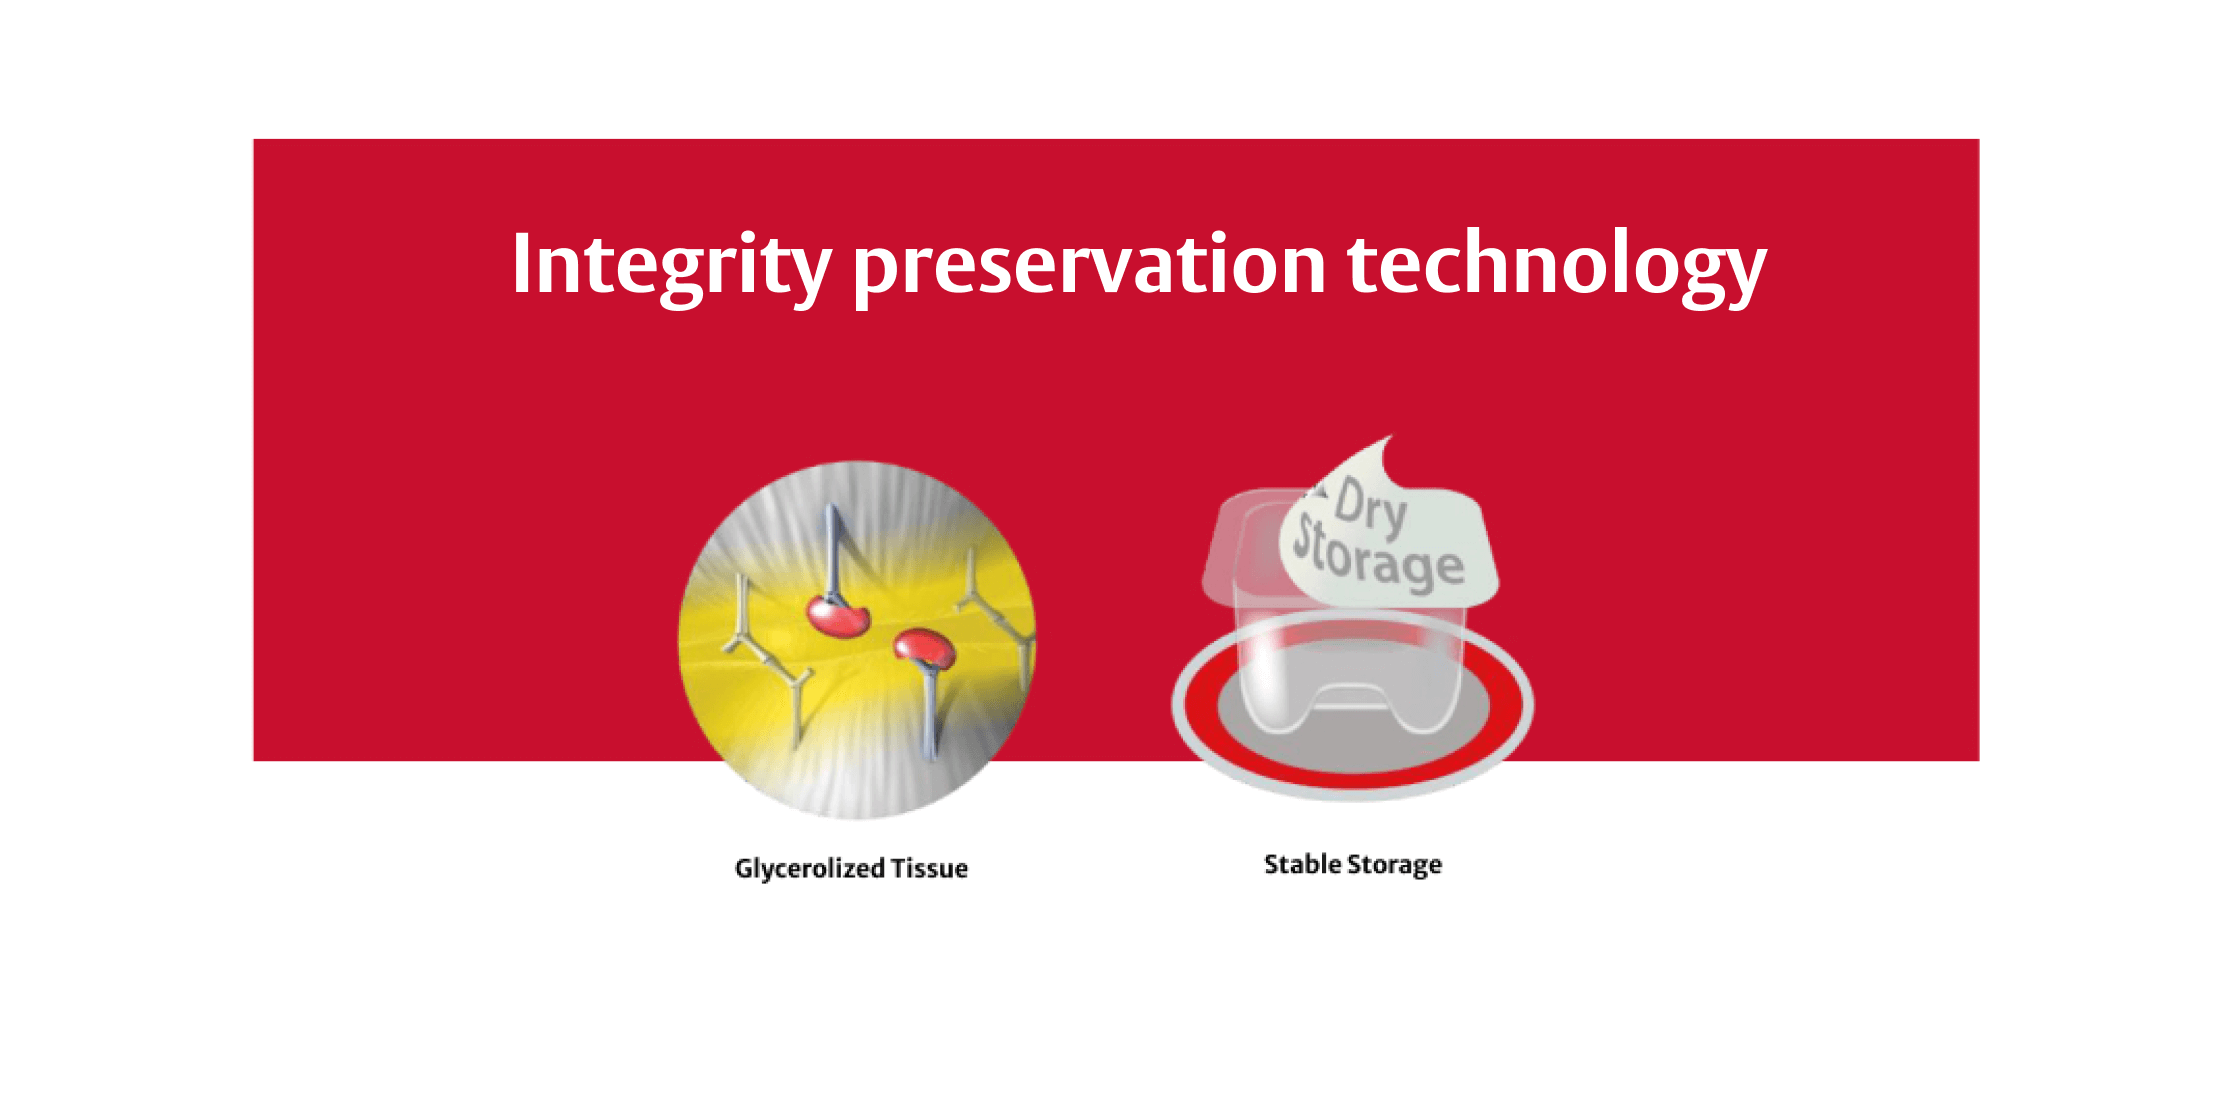 Integrity preservation technology - 2